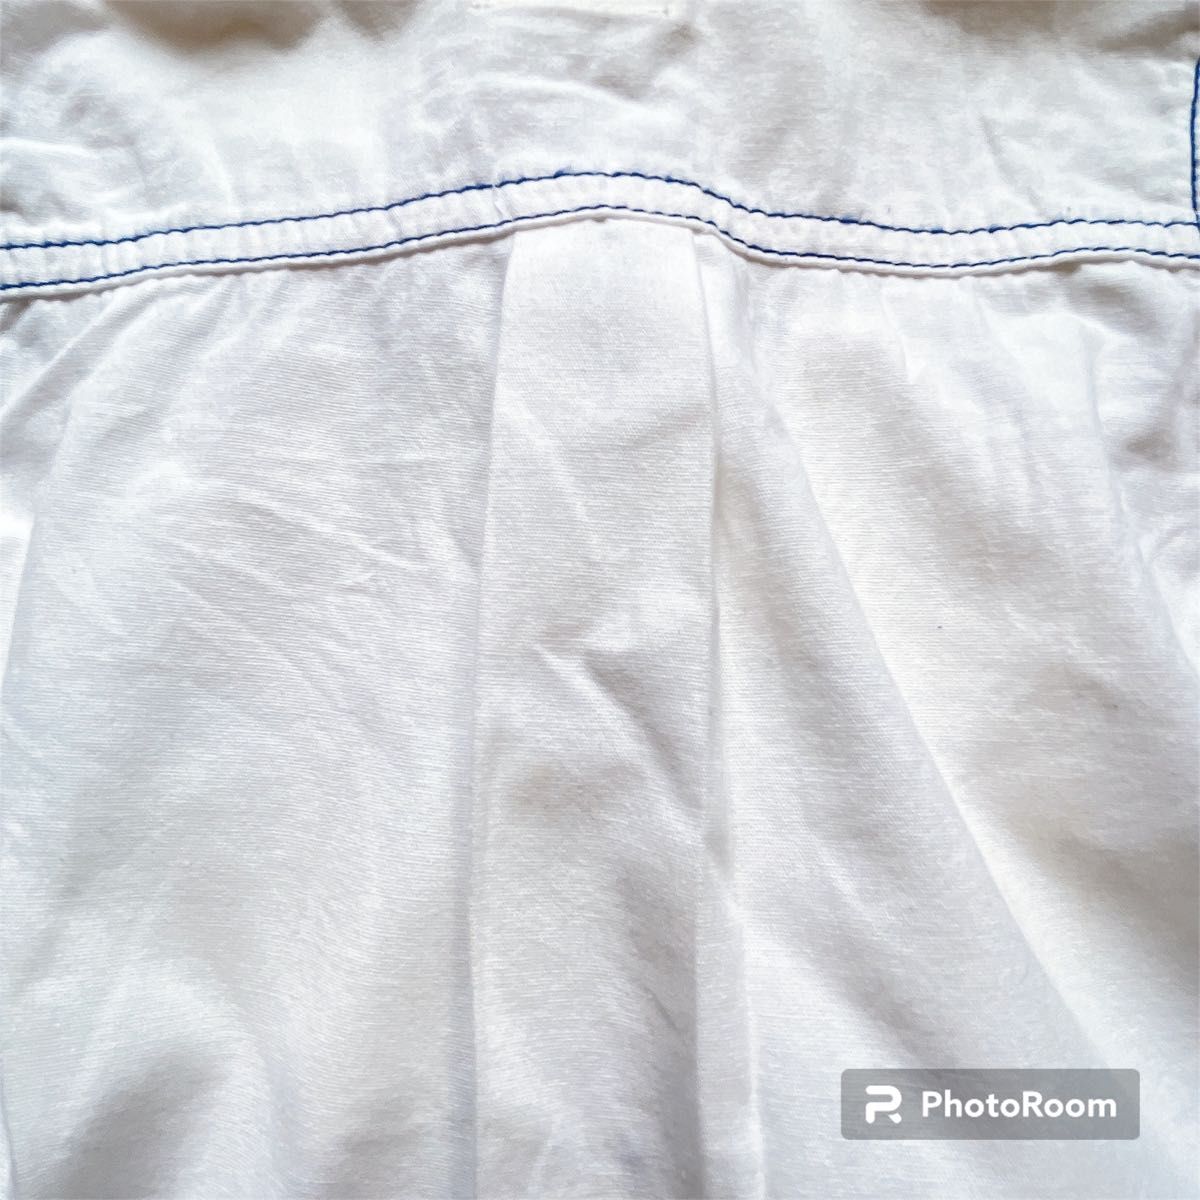 Lee リー ワイシャツ シャツ 80 ホワイト 男の子 女の子 ベビー スーツ 長袖 ウエスタンデニムシャツ デニムシャツ 